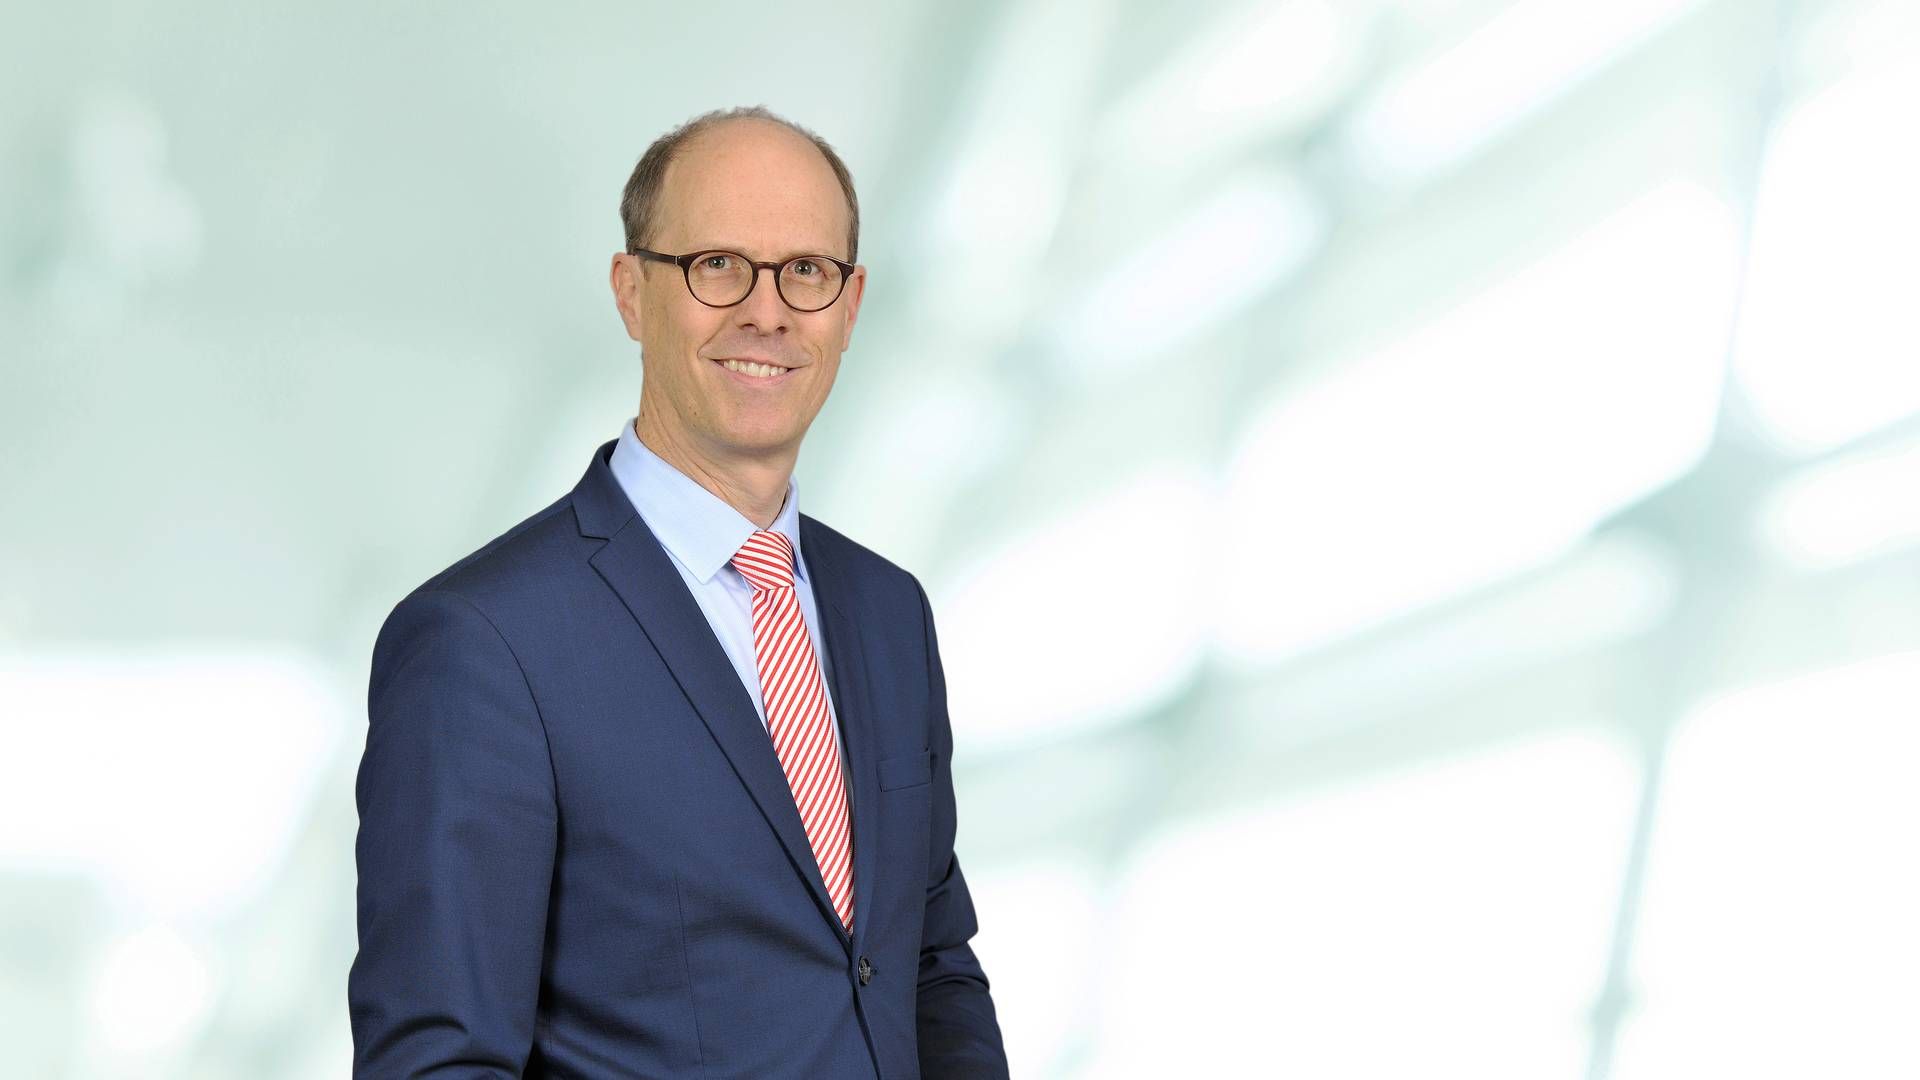 Michael Müller, CFO of RWE AG. | Photo: Rwe Pr